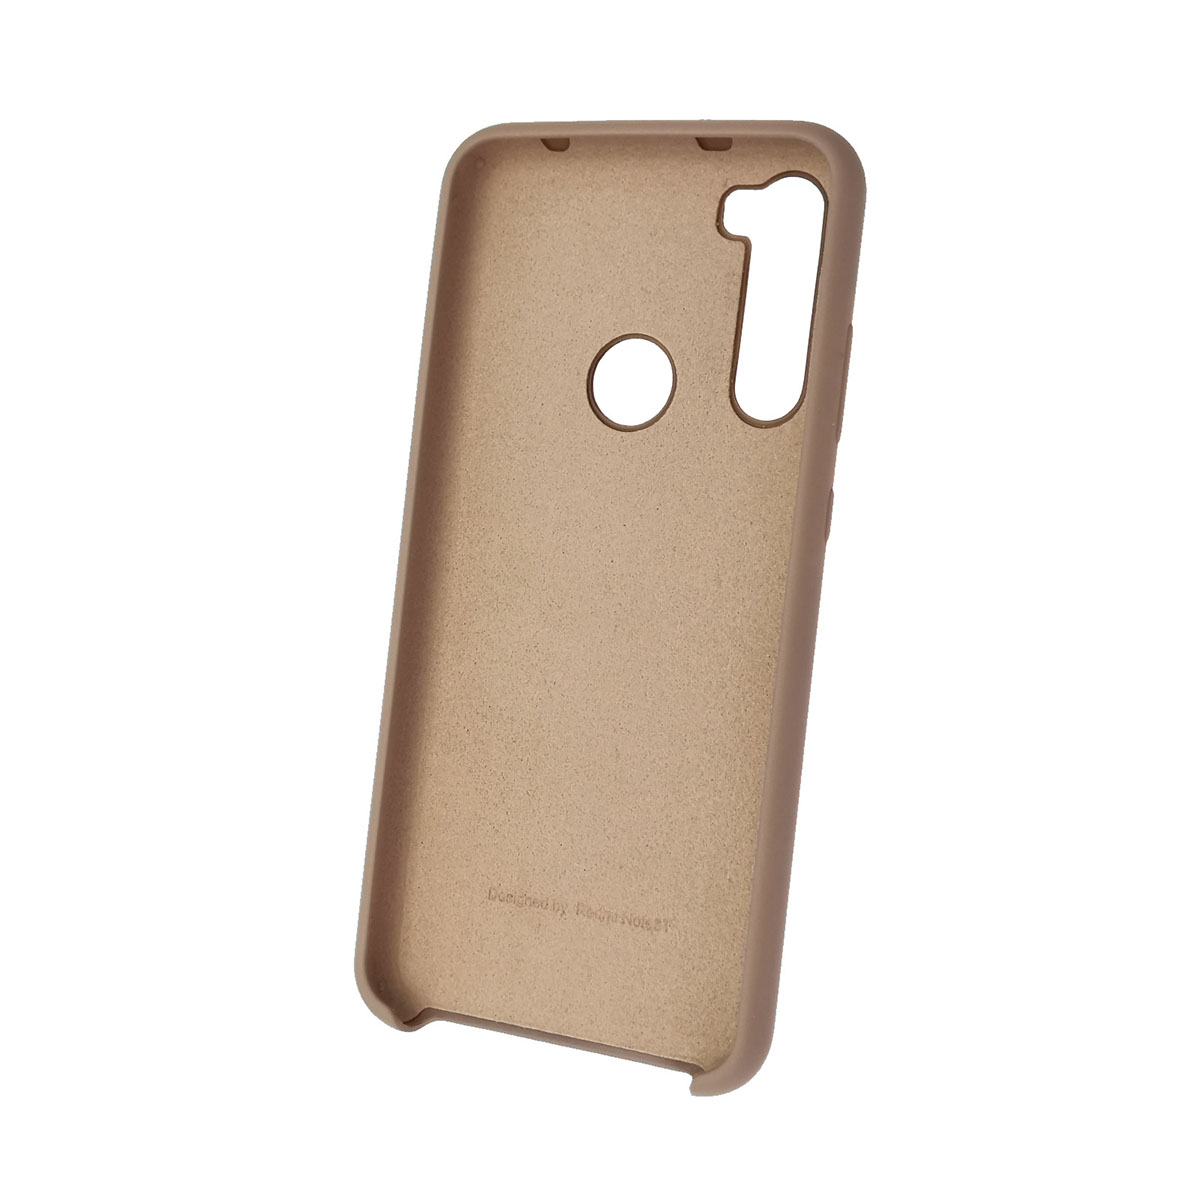 Чехол накладка Silicon Cover для XIAOMI Redmi Note 8T, силикон, бархат, цвет розовый песок.